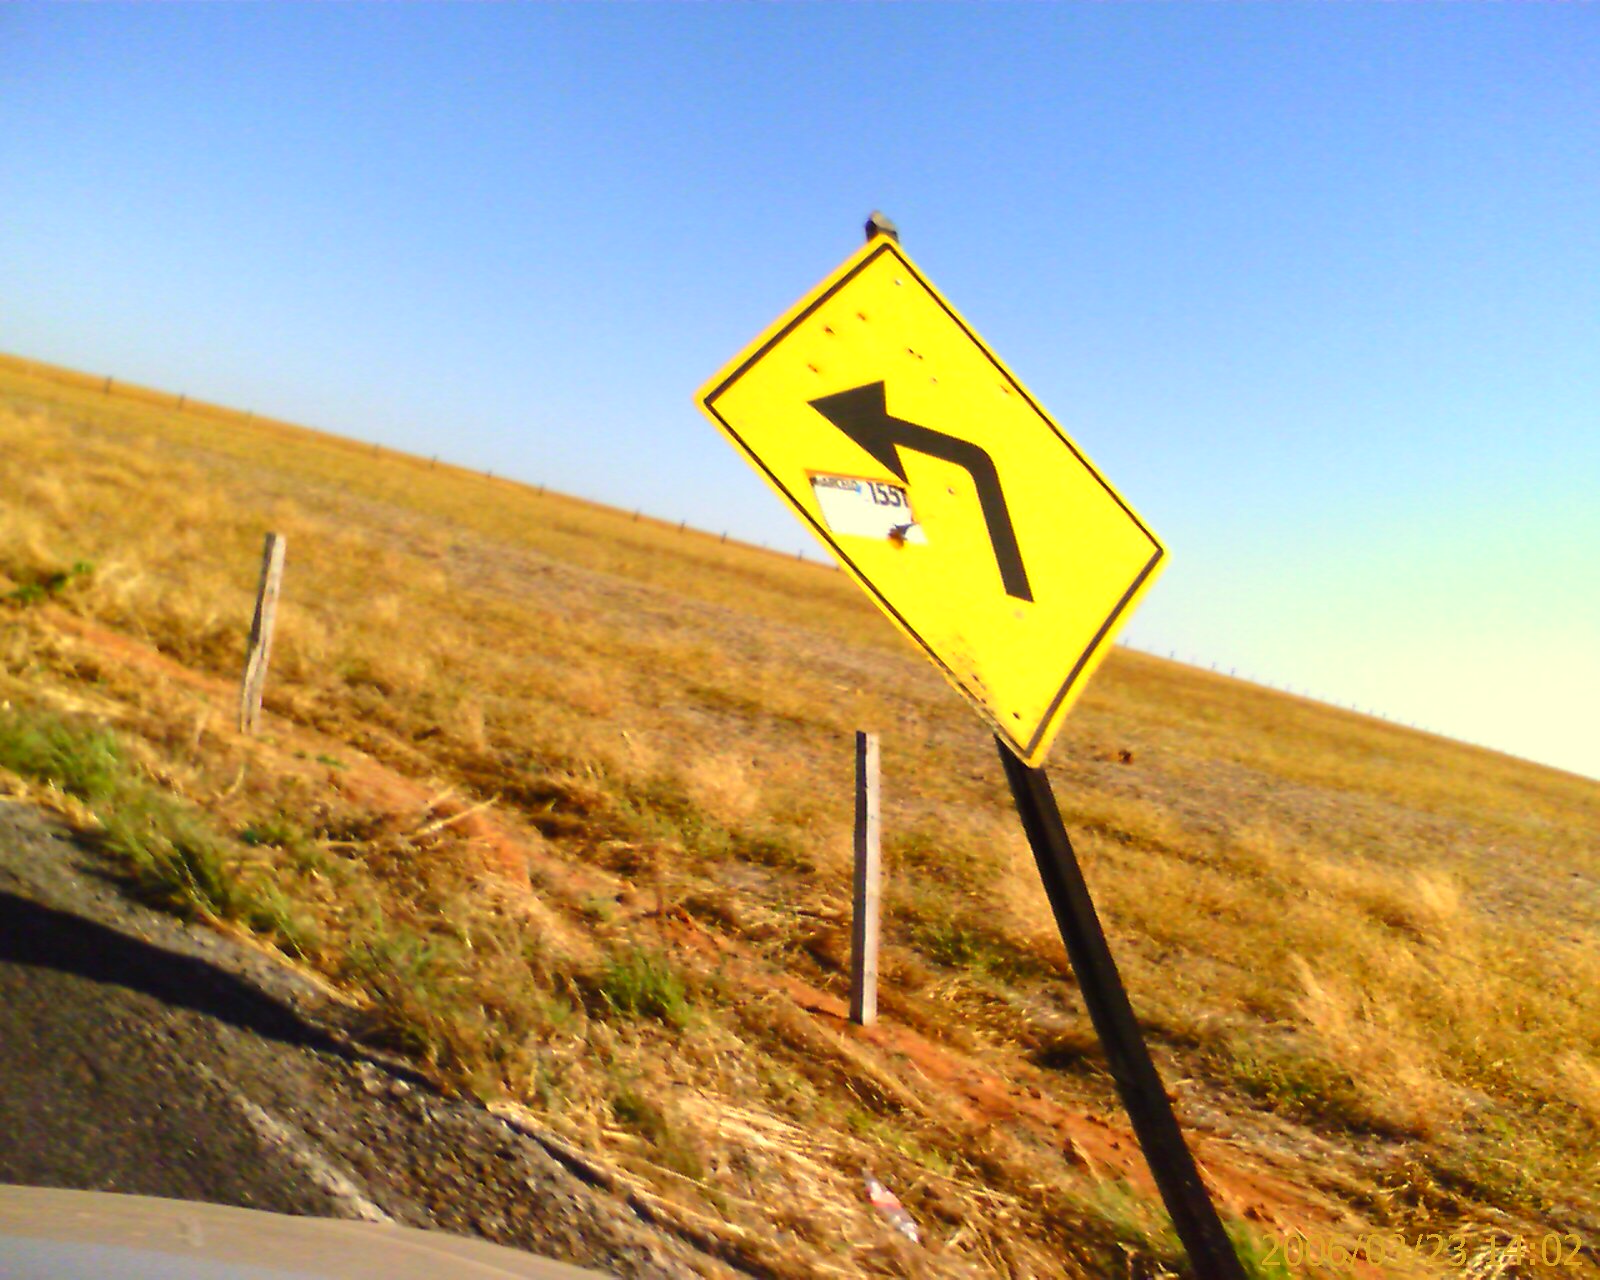 a street sign on a dry grassy plain